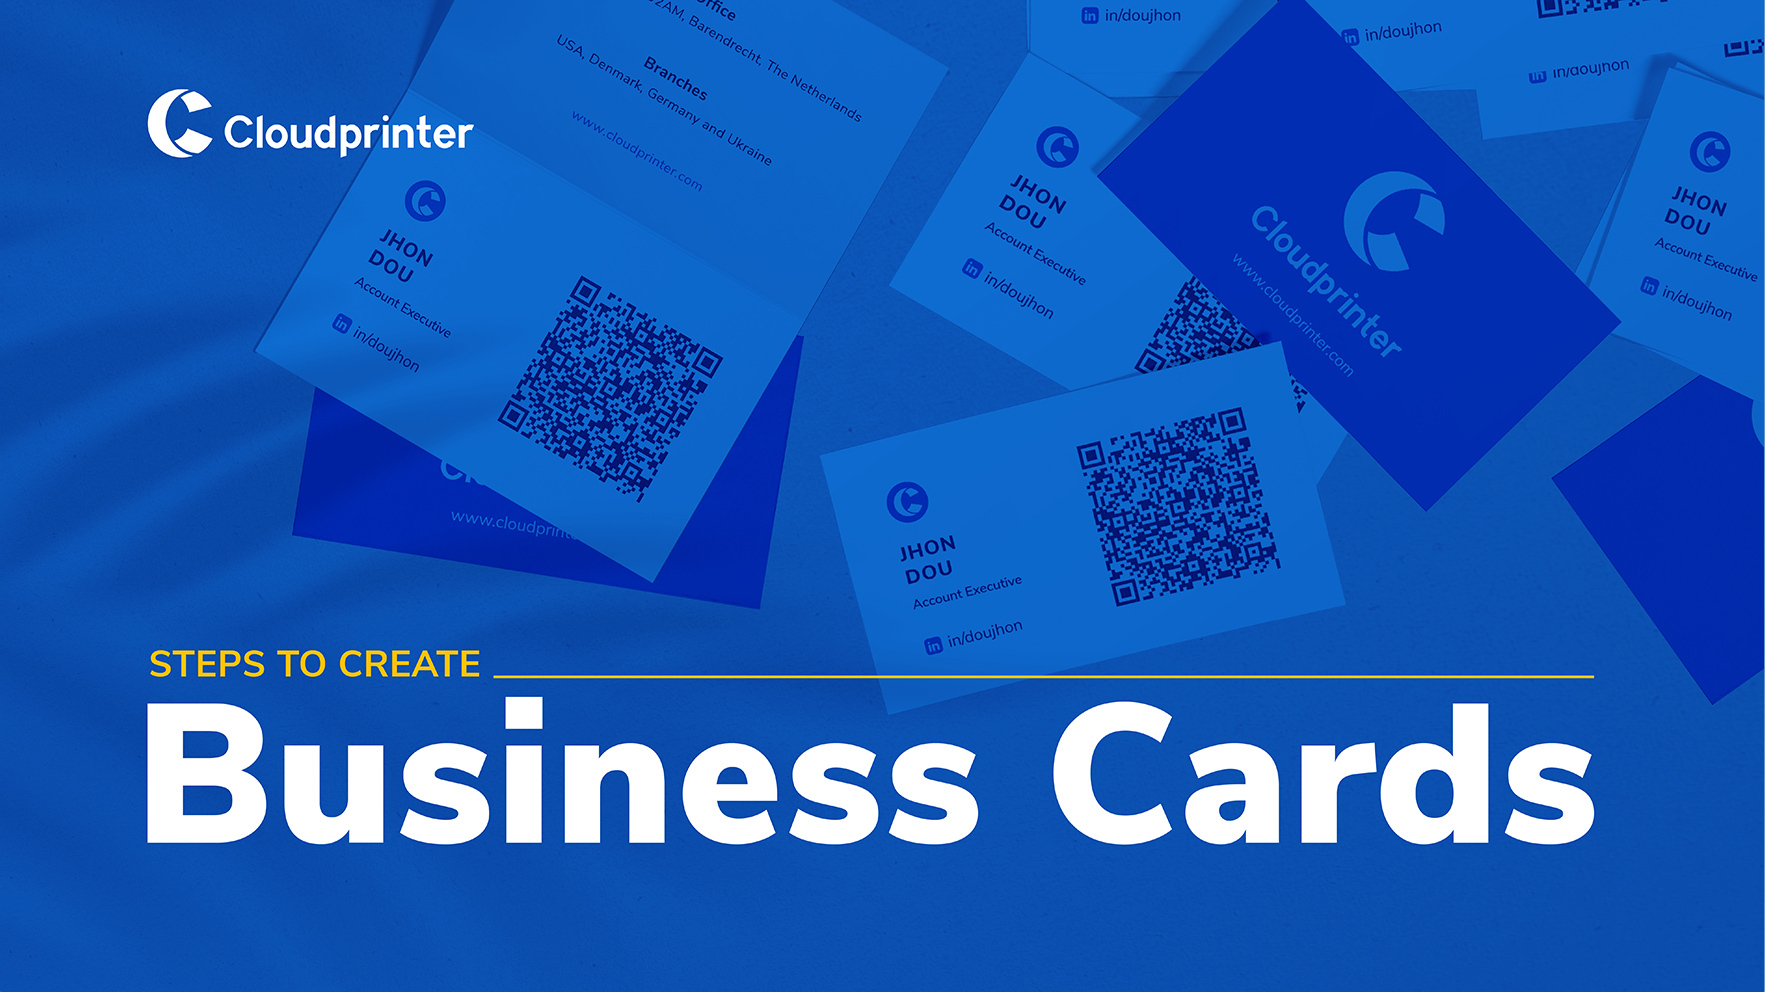 Print custom business cards on demand